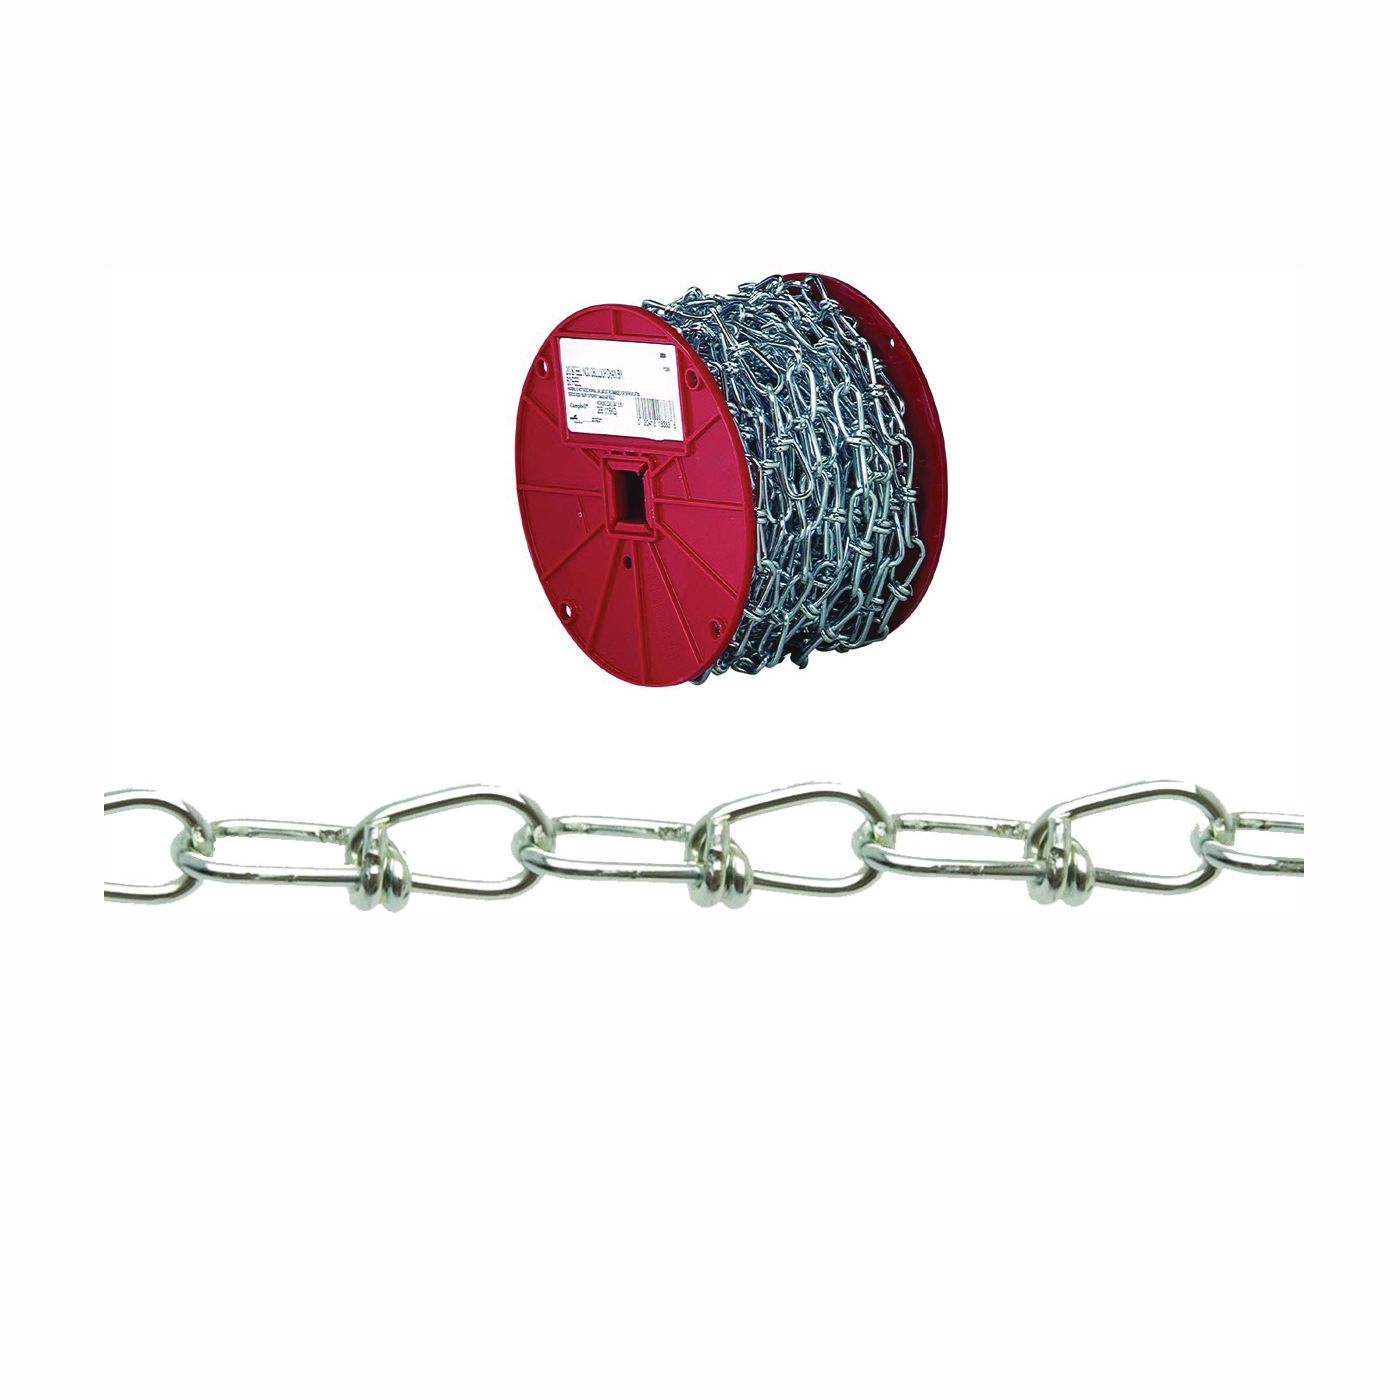 0723227 Loop Chain, #3, 200 ft L, 90 lb Working Load, Low Carbon Steel, Zinc